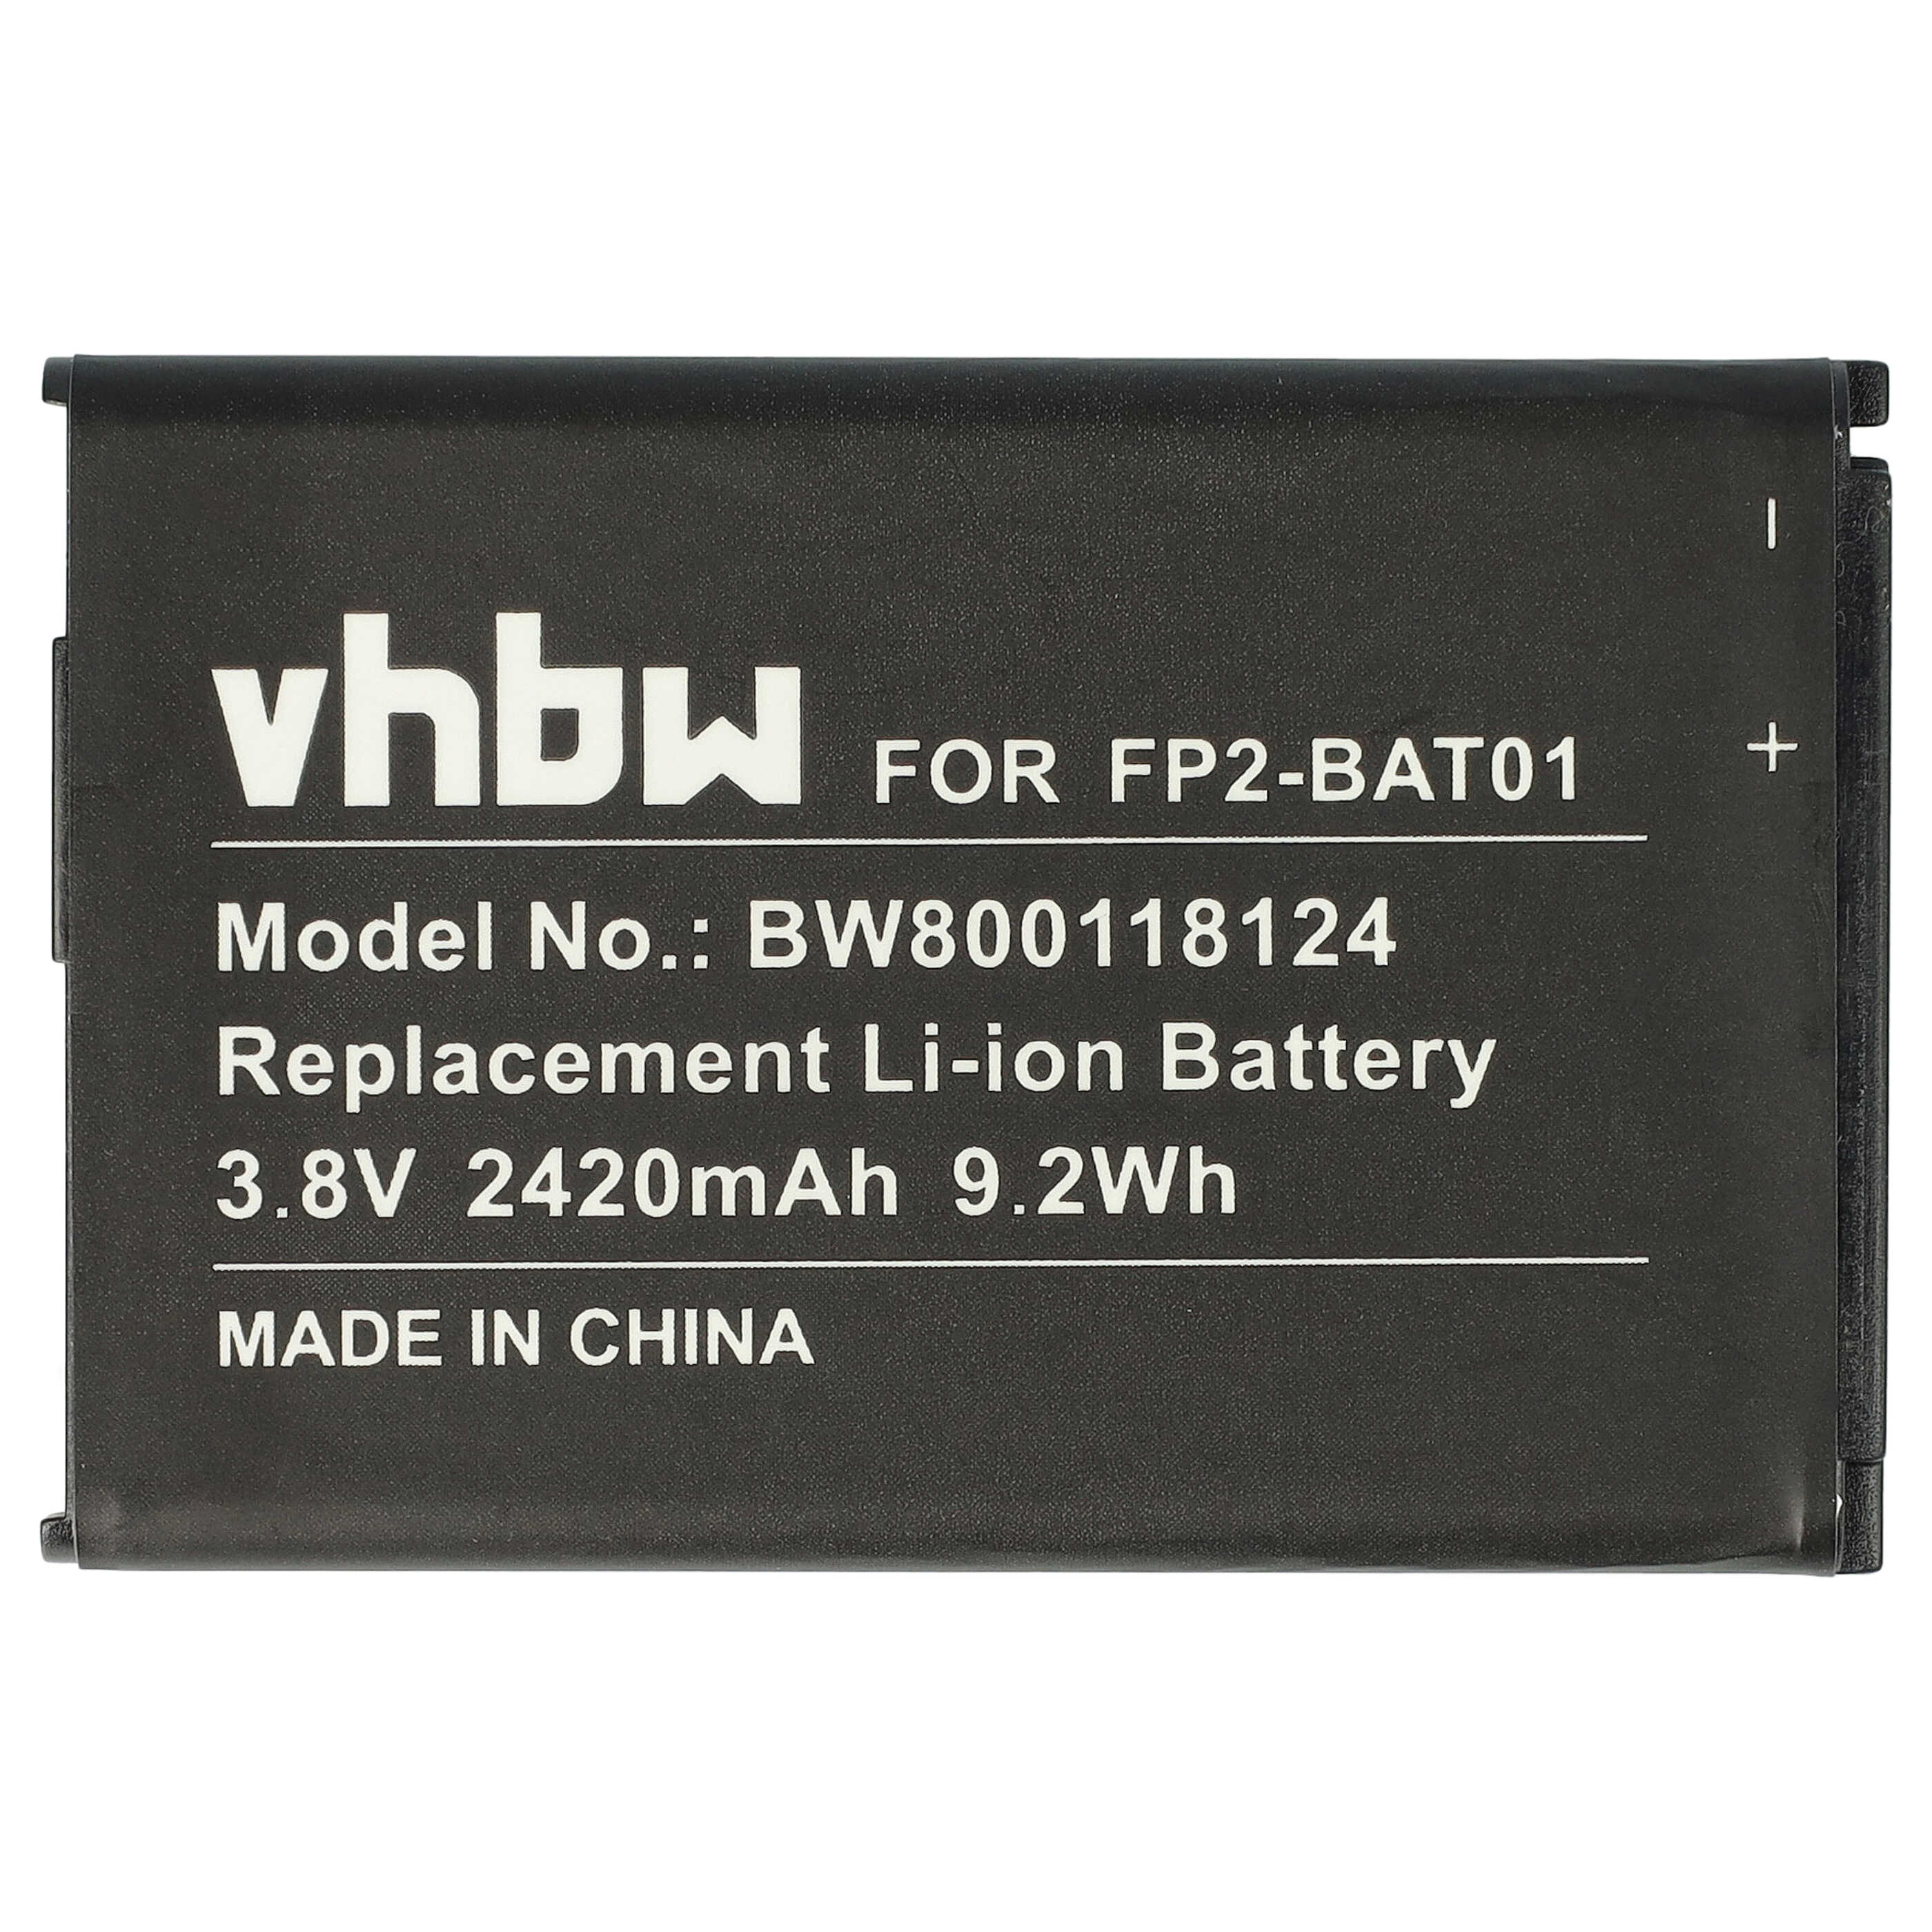 Batteria sostituisce Fairphone FP2-BAT01 per cellulare Fairphone - 2420mAh 3,8V Li-Ion